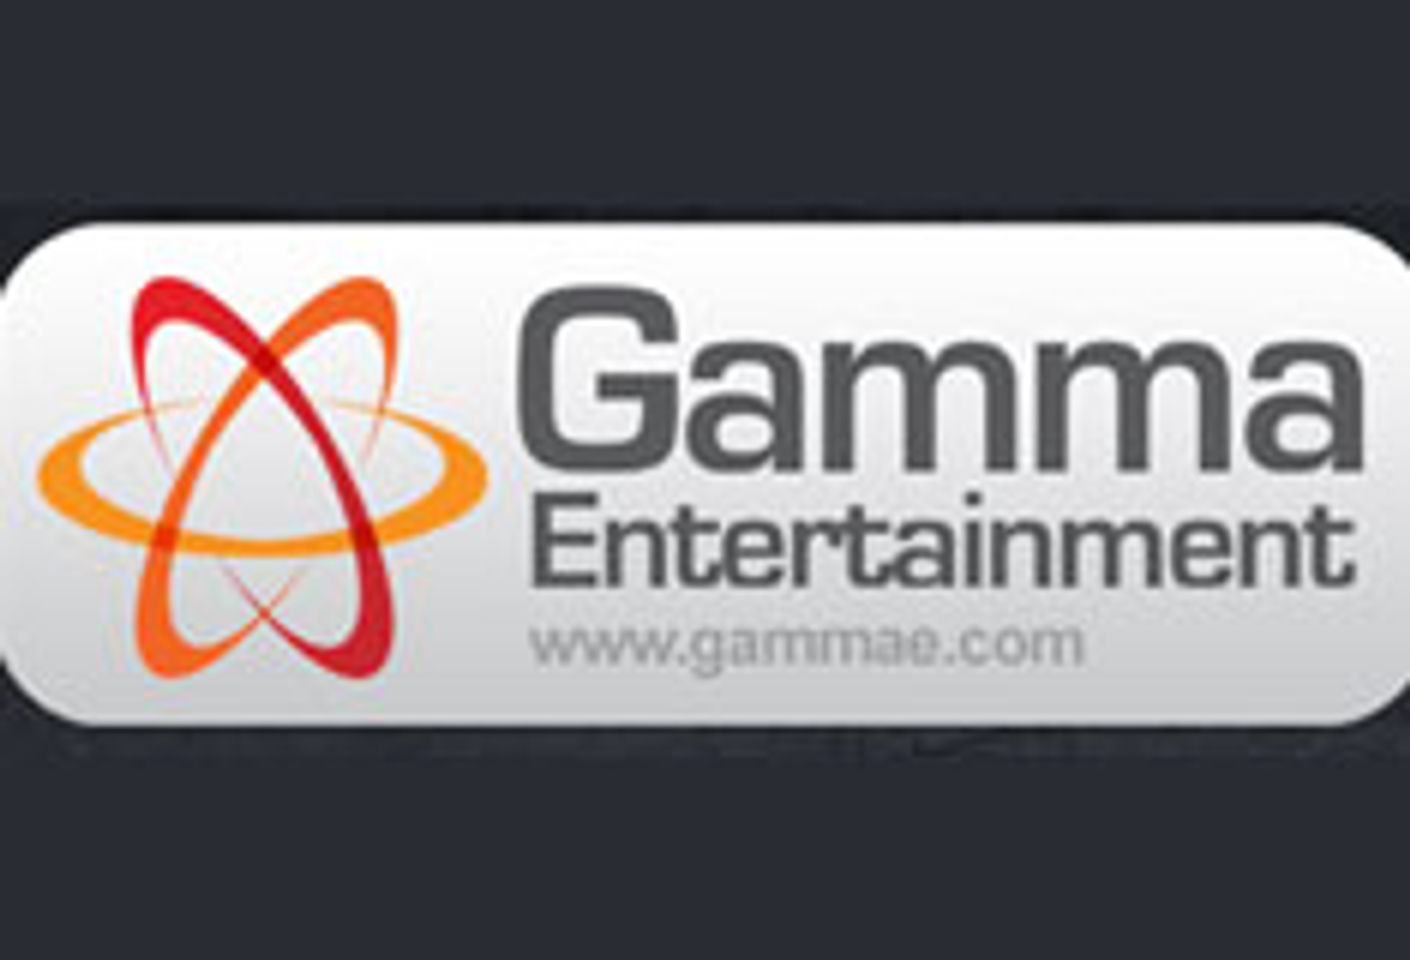 Gamma Entertainment Receives YNOT Awards Nomination